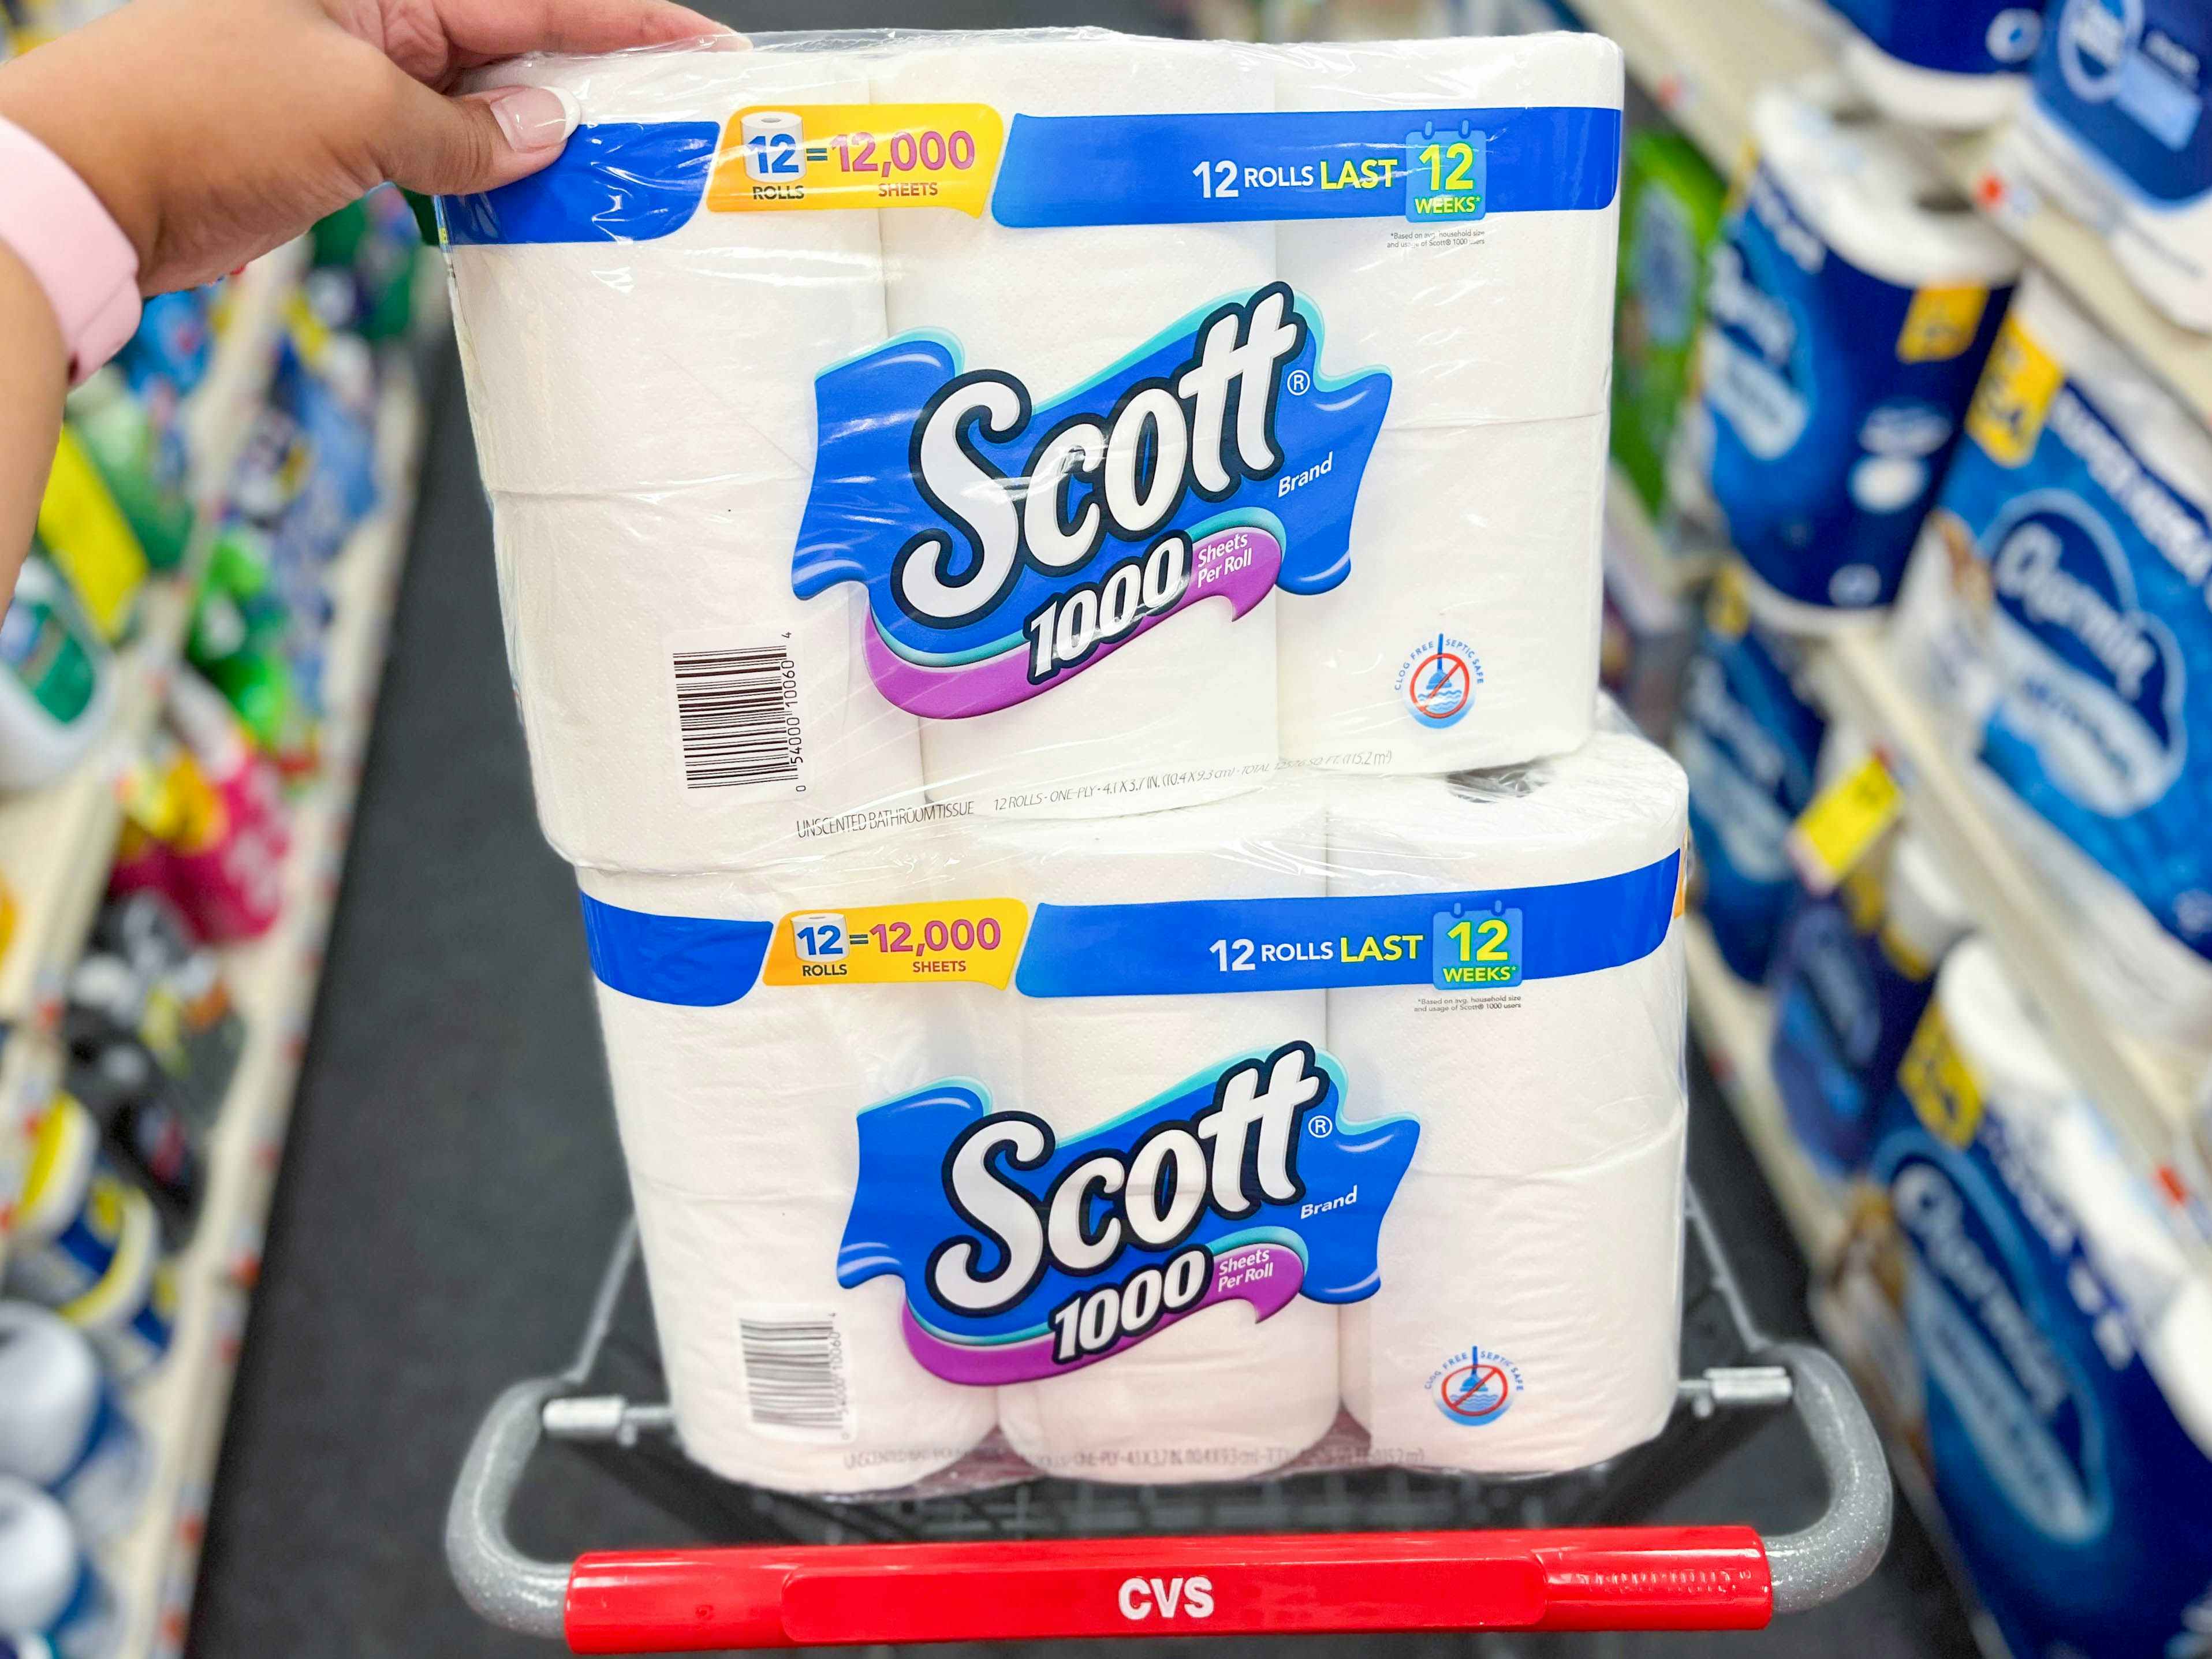 two packs of Scott toilet paper in shopping cart